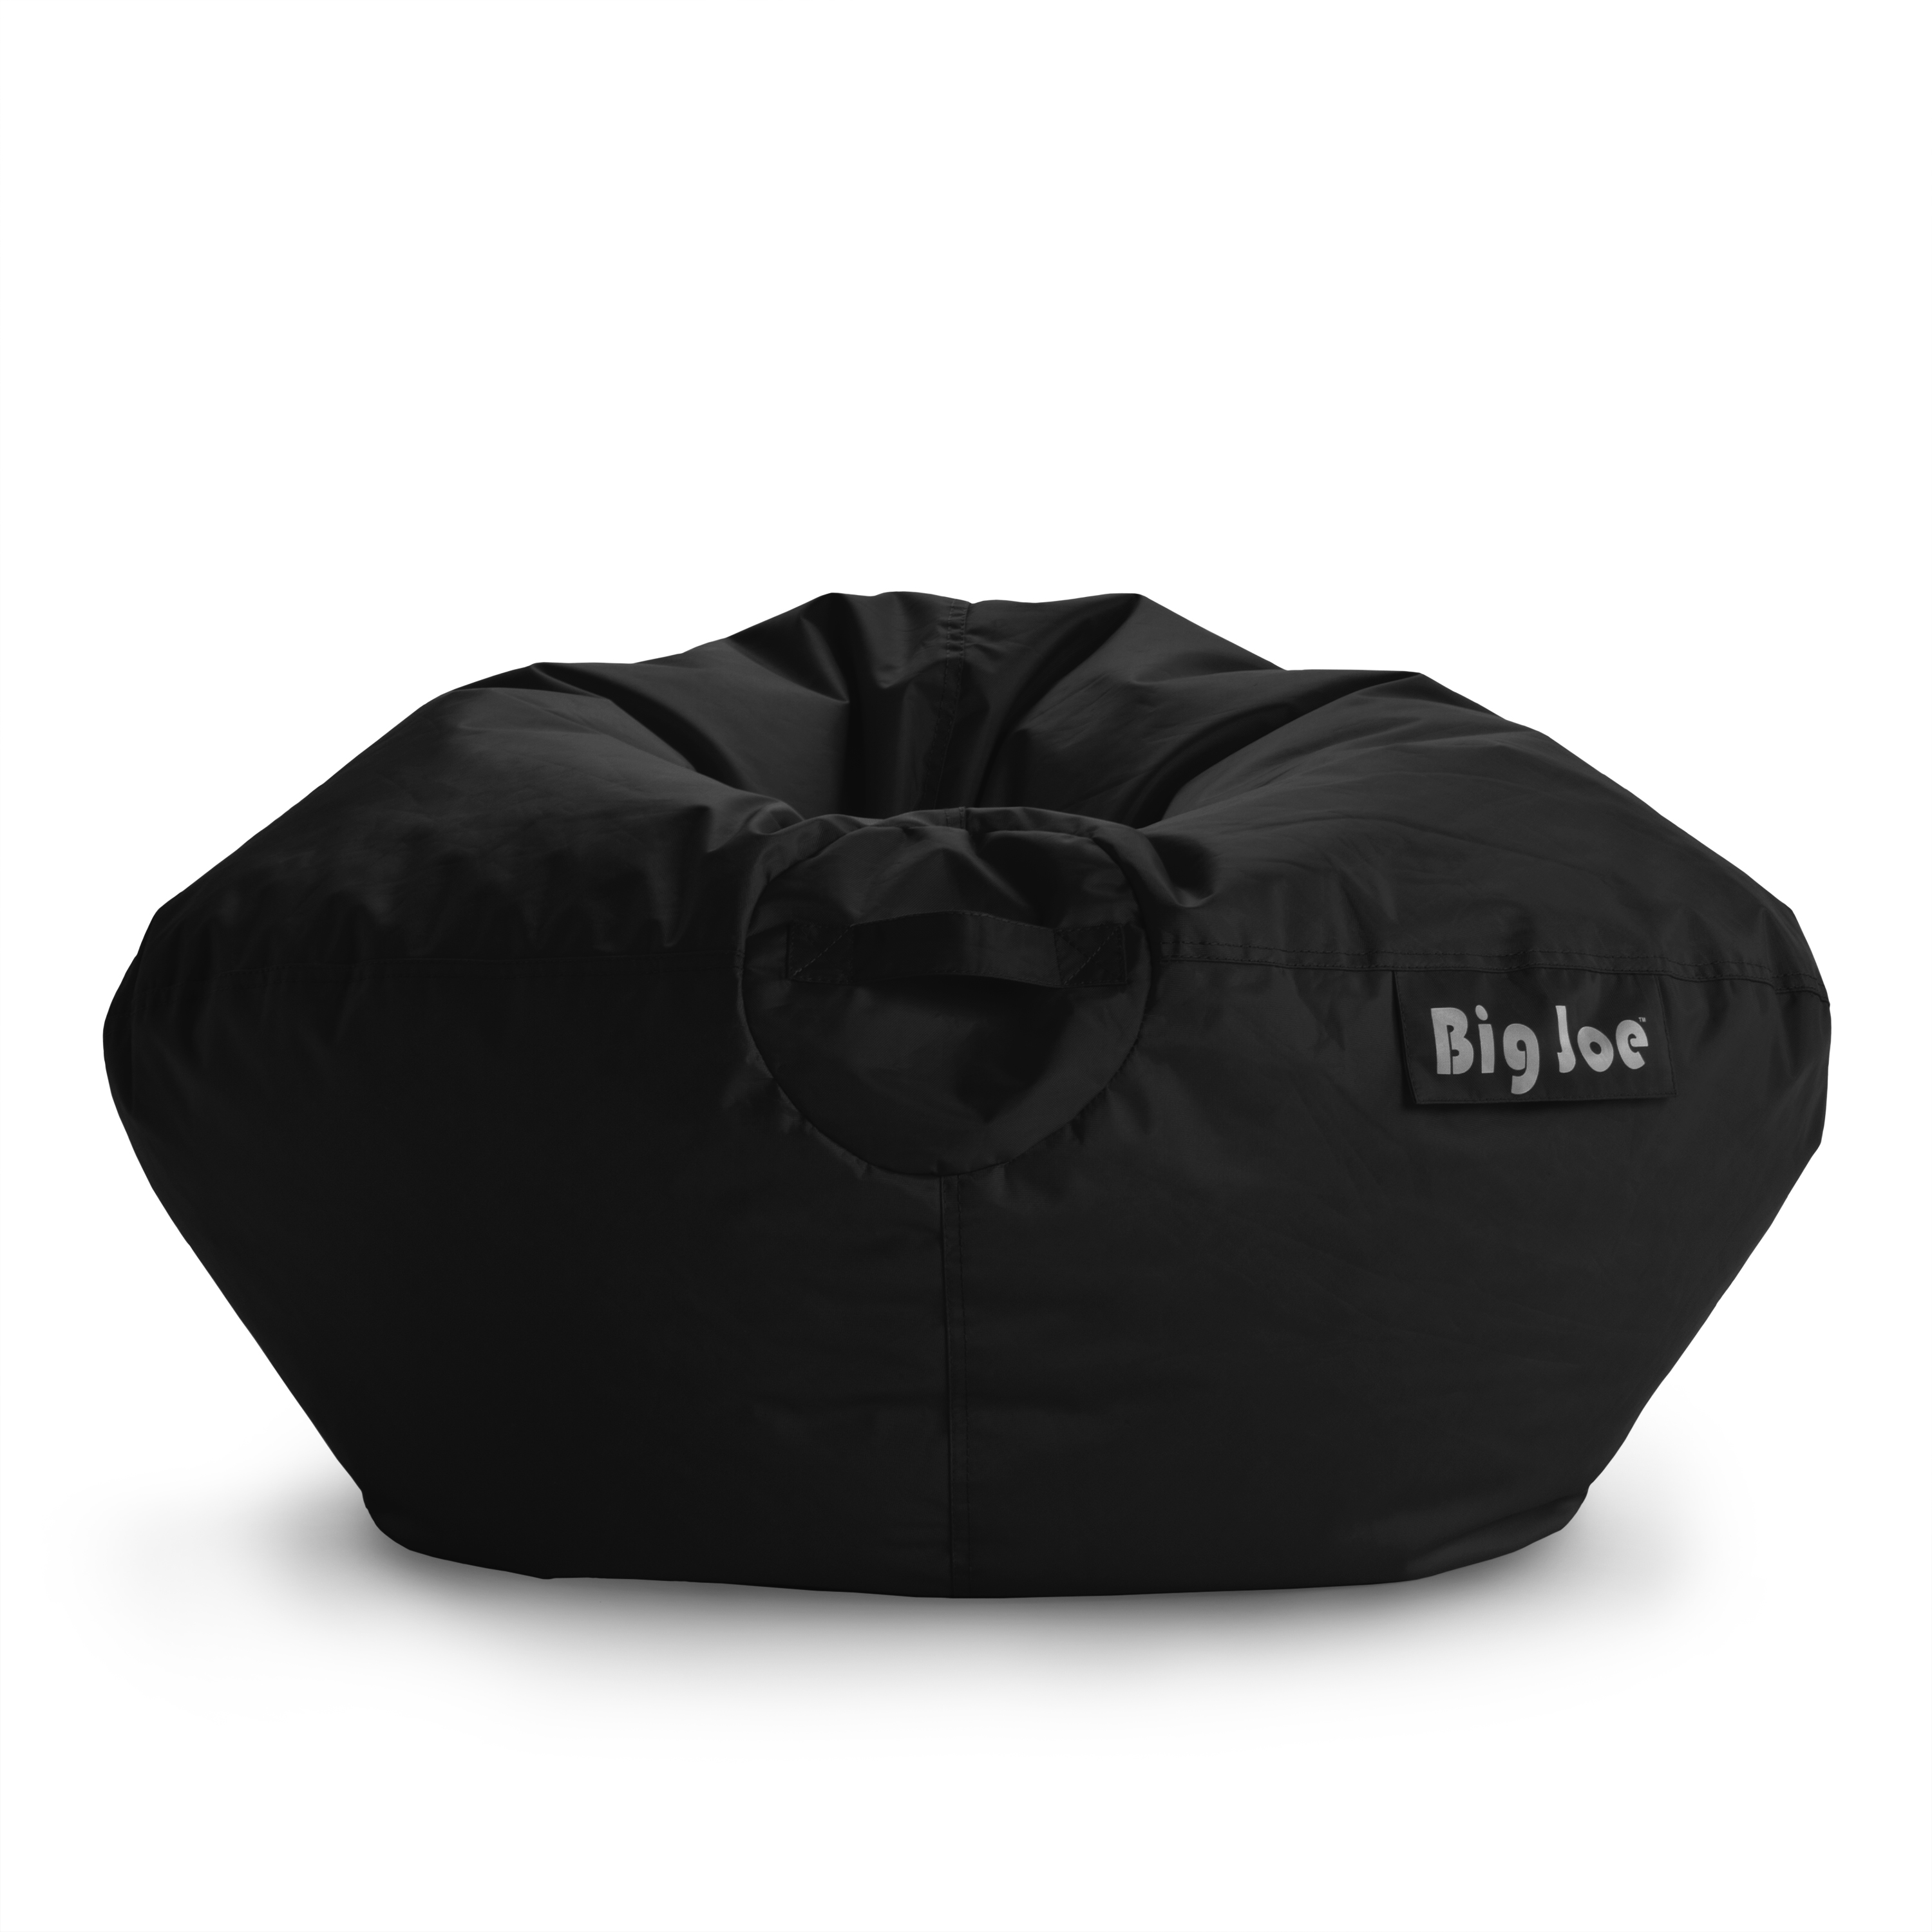 Big Joe Classic Bean Bag Chair, Black Smartmax, Durable Polyester Nylon Blend, 2 feet Round - image 1 of 6